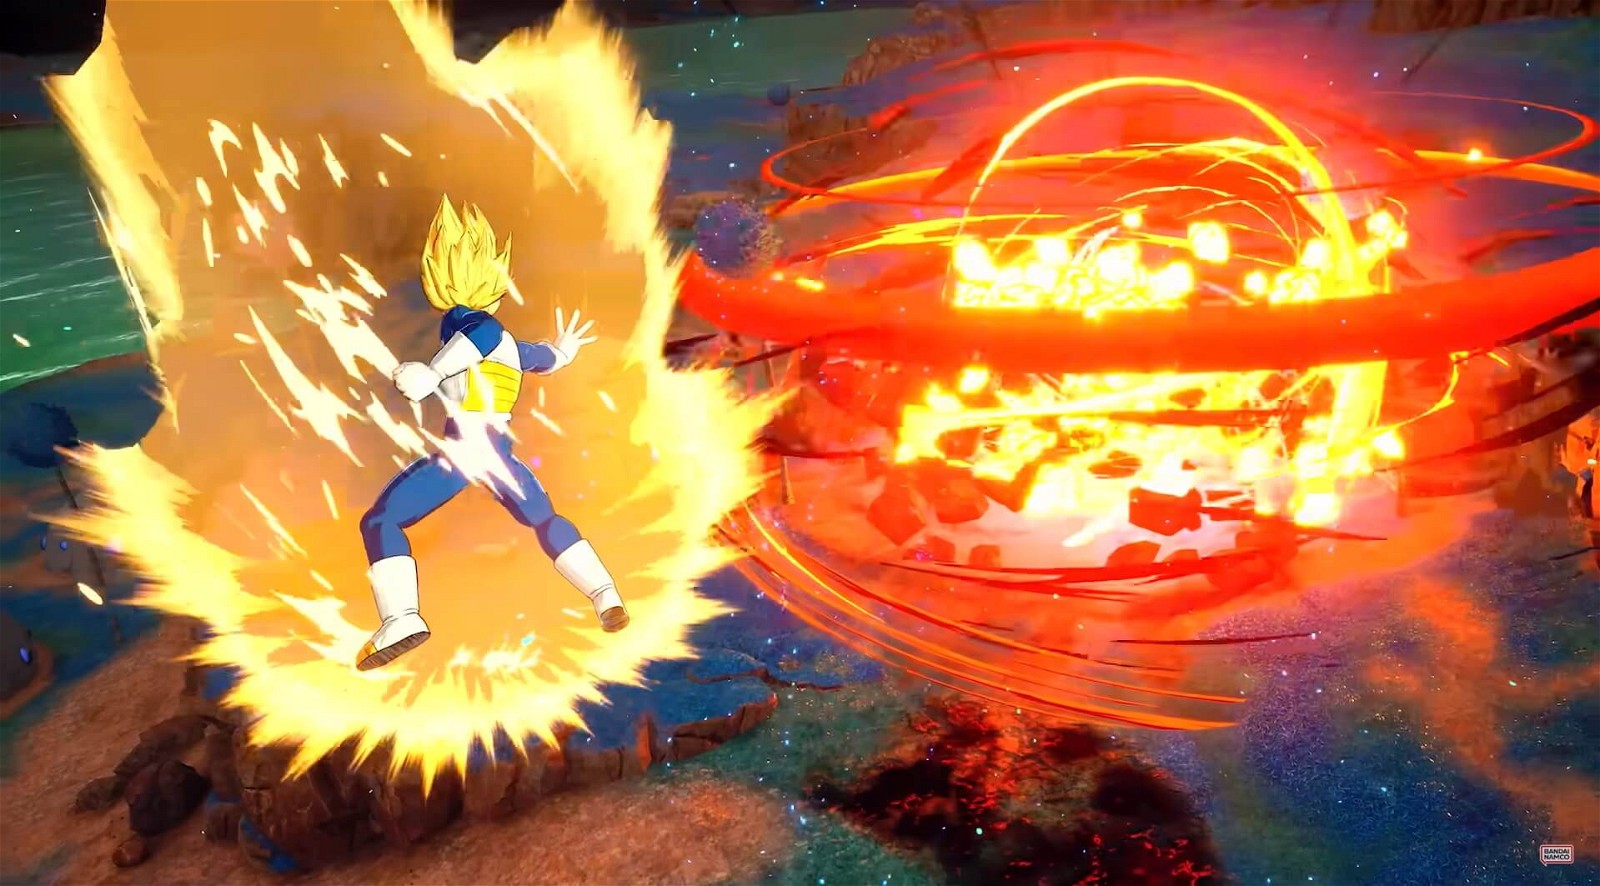 Vegeta using an energy attack against Goku in Dragon Ball: Sparking Zero. Credits: Bandai Namco